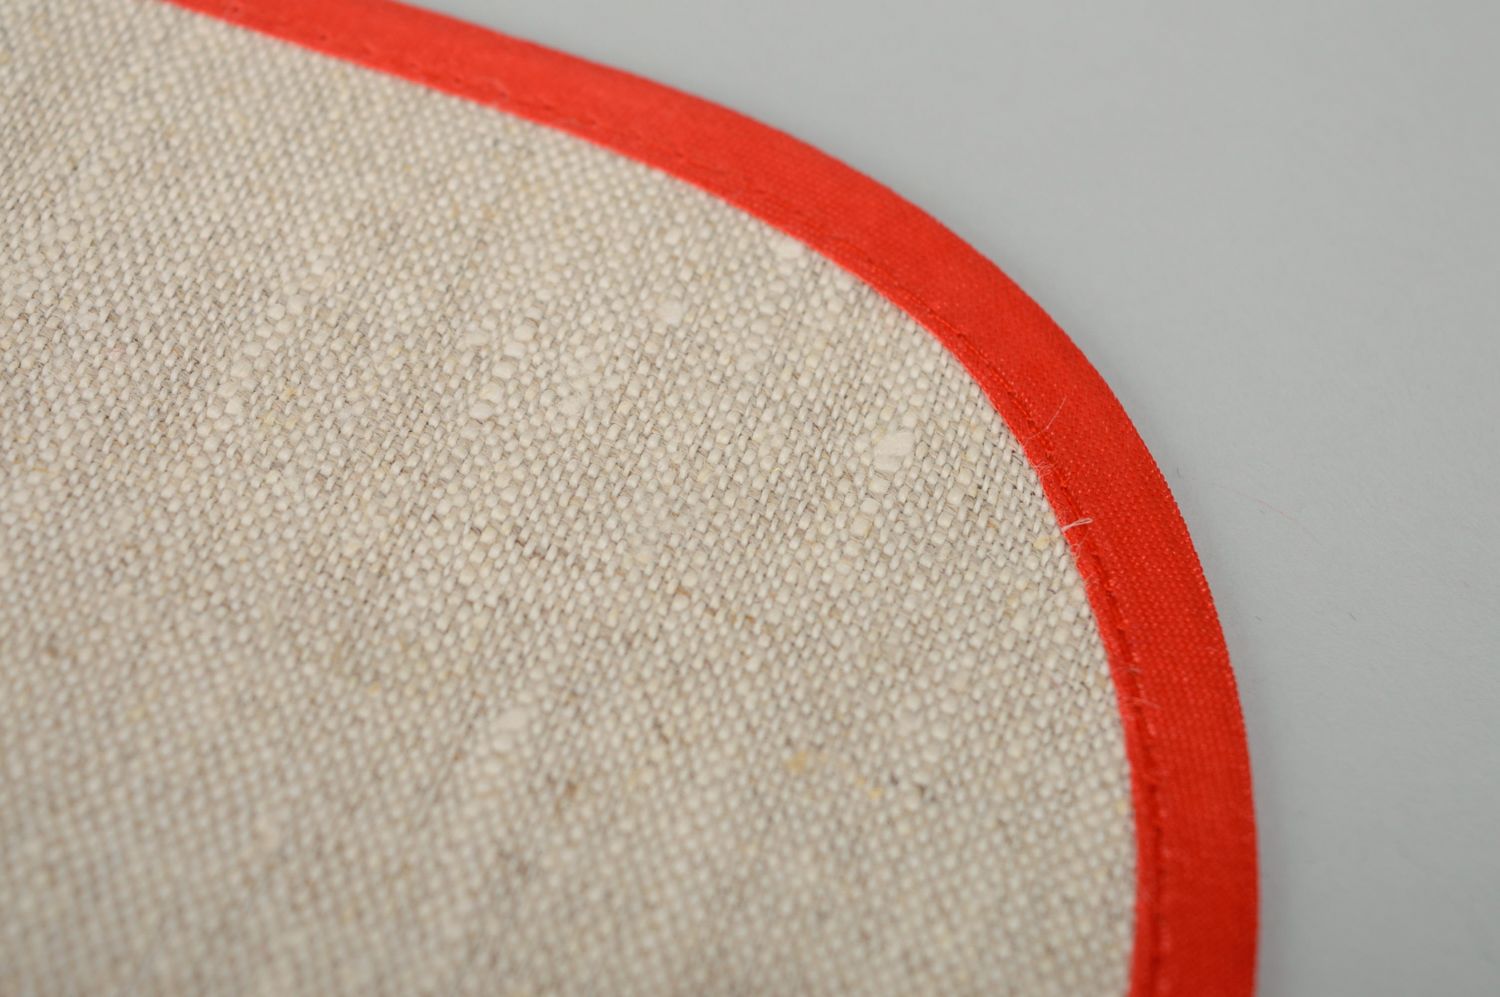 Decorative napkin with satin stitch embroidery photo 3